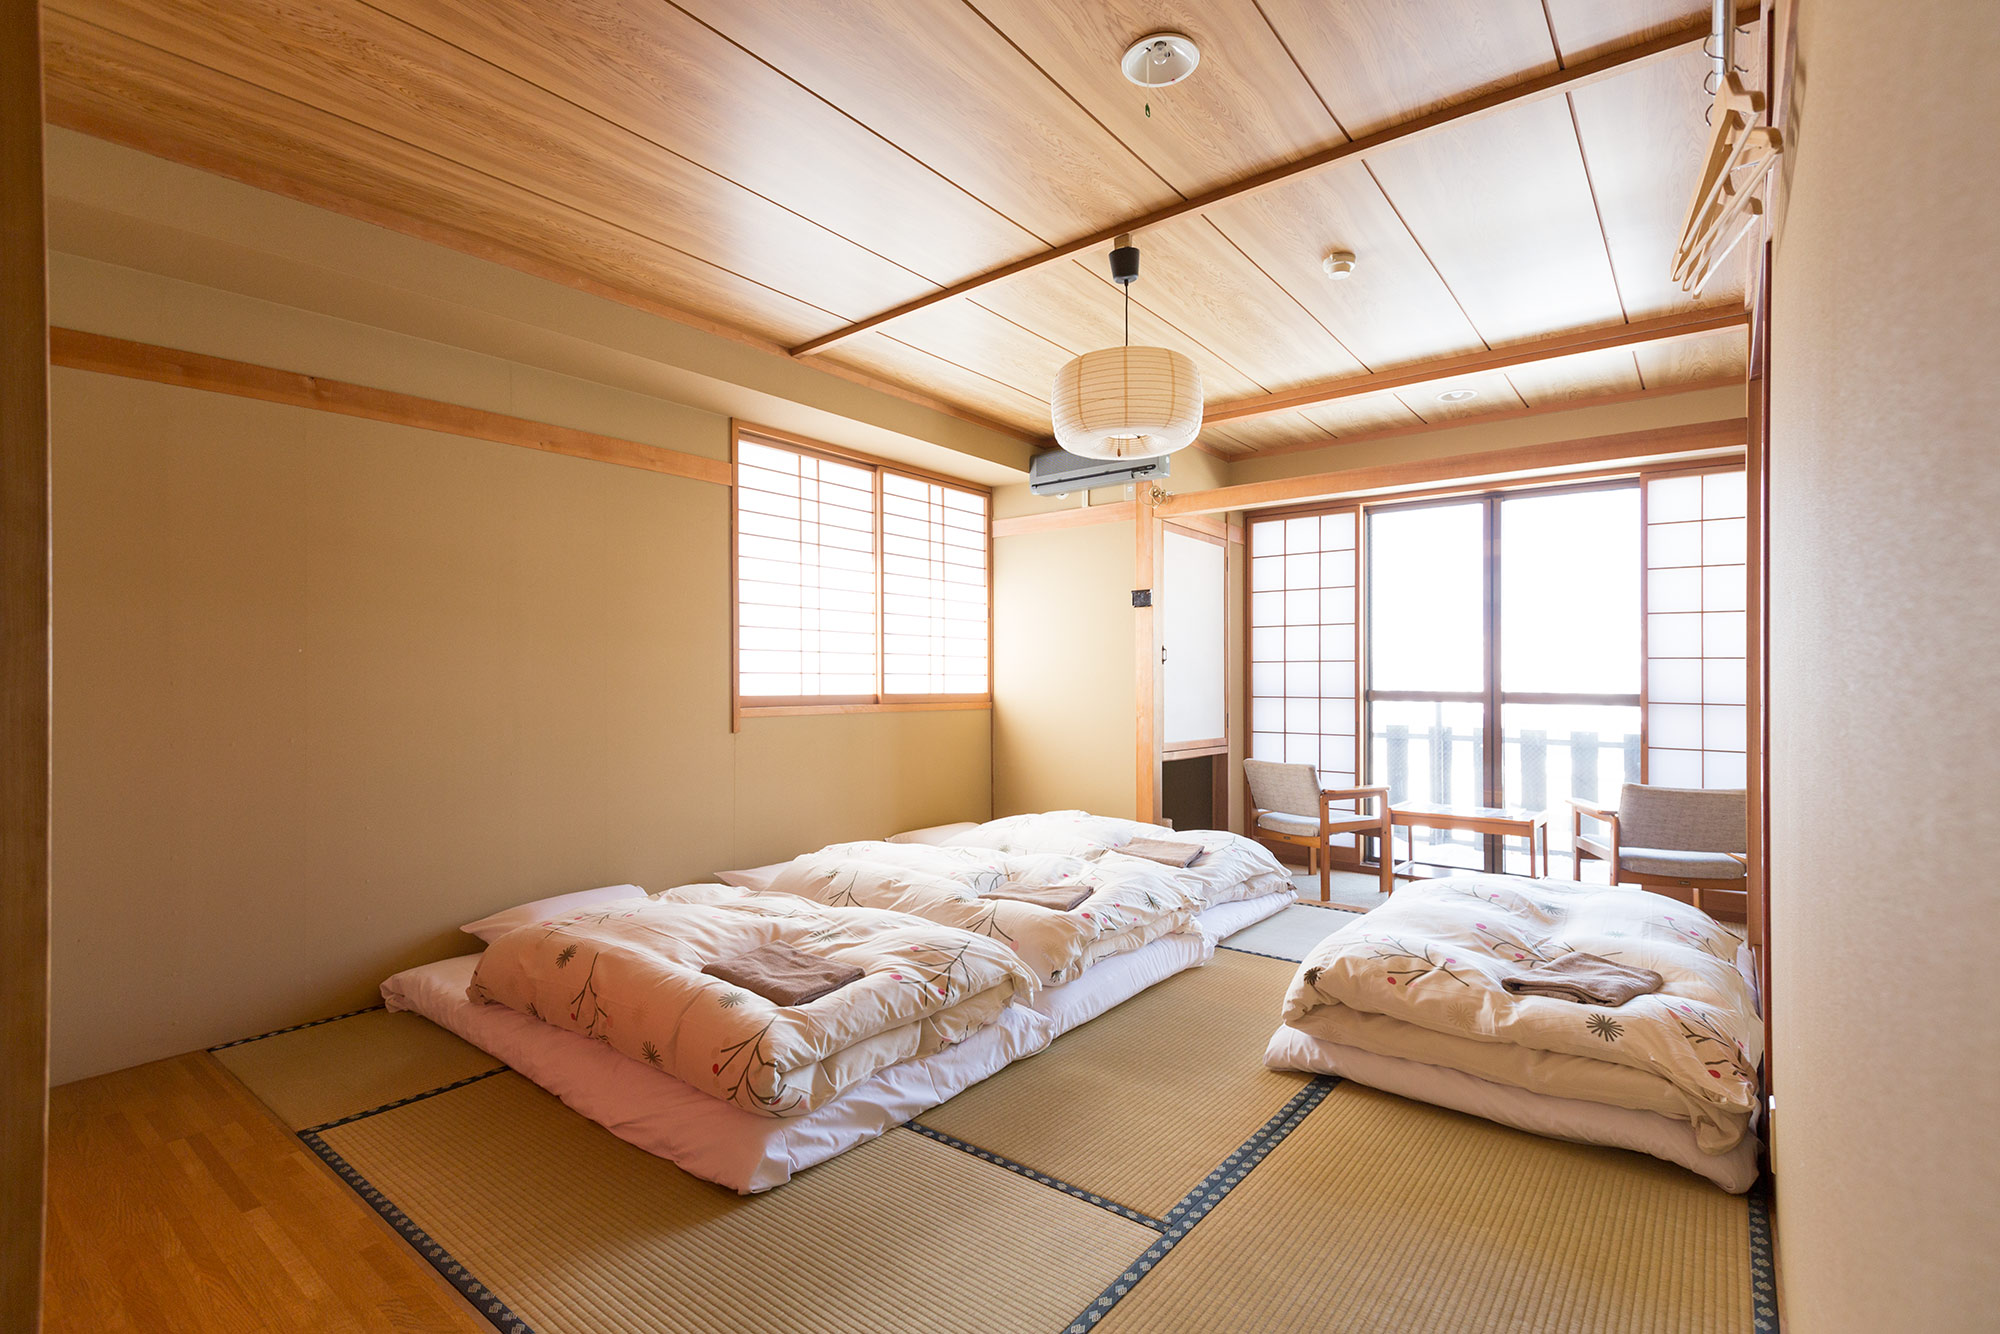 Tatami mats in the bedroom - Japanese Tatami Room